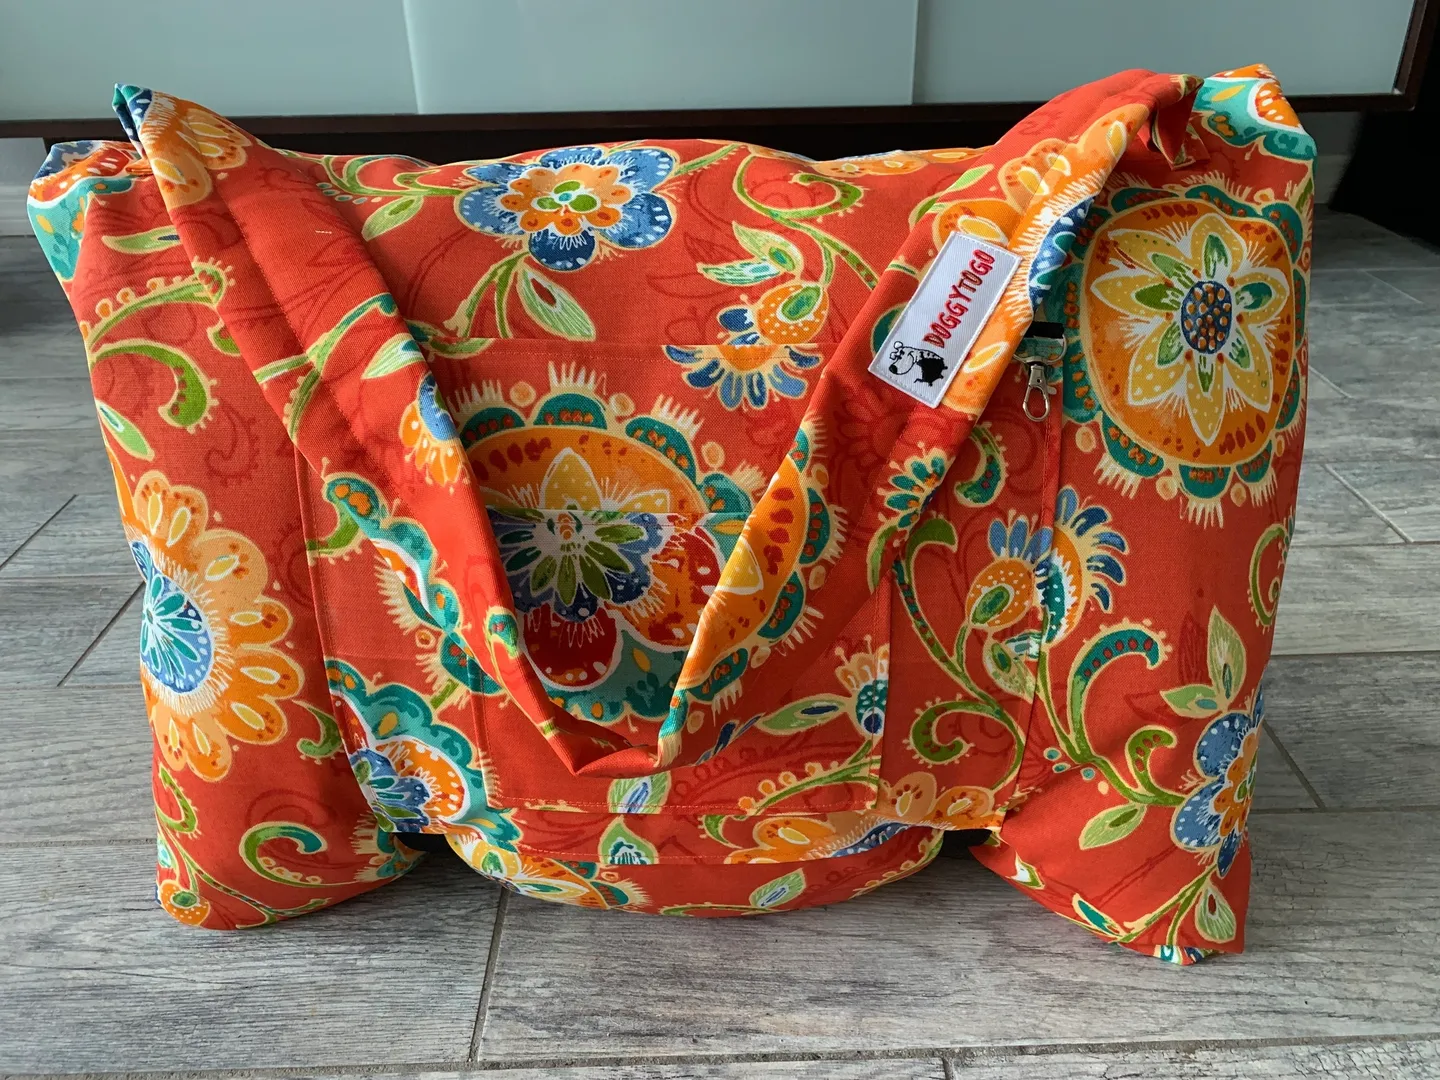 An orange color dog bed bag with flower designs printed on it